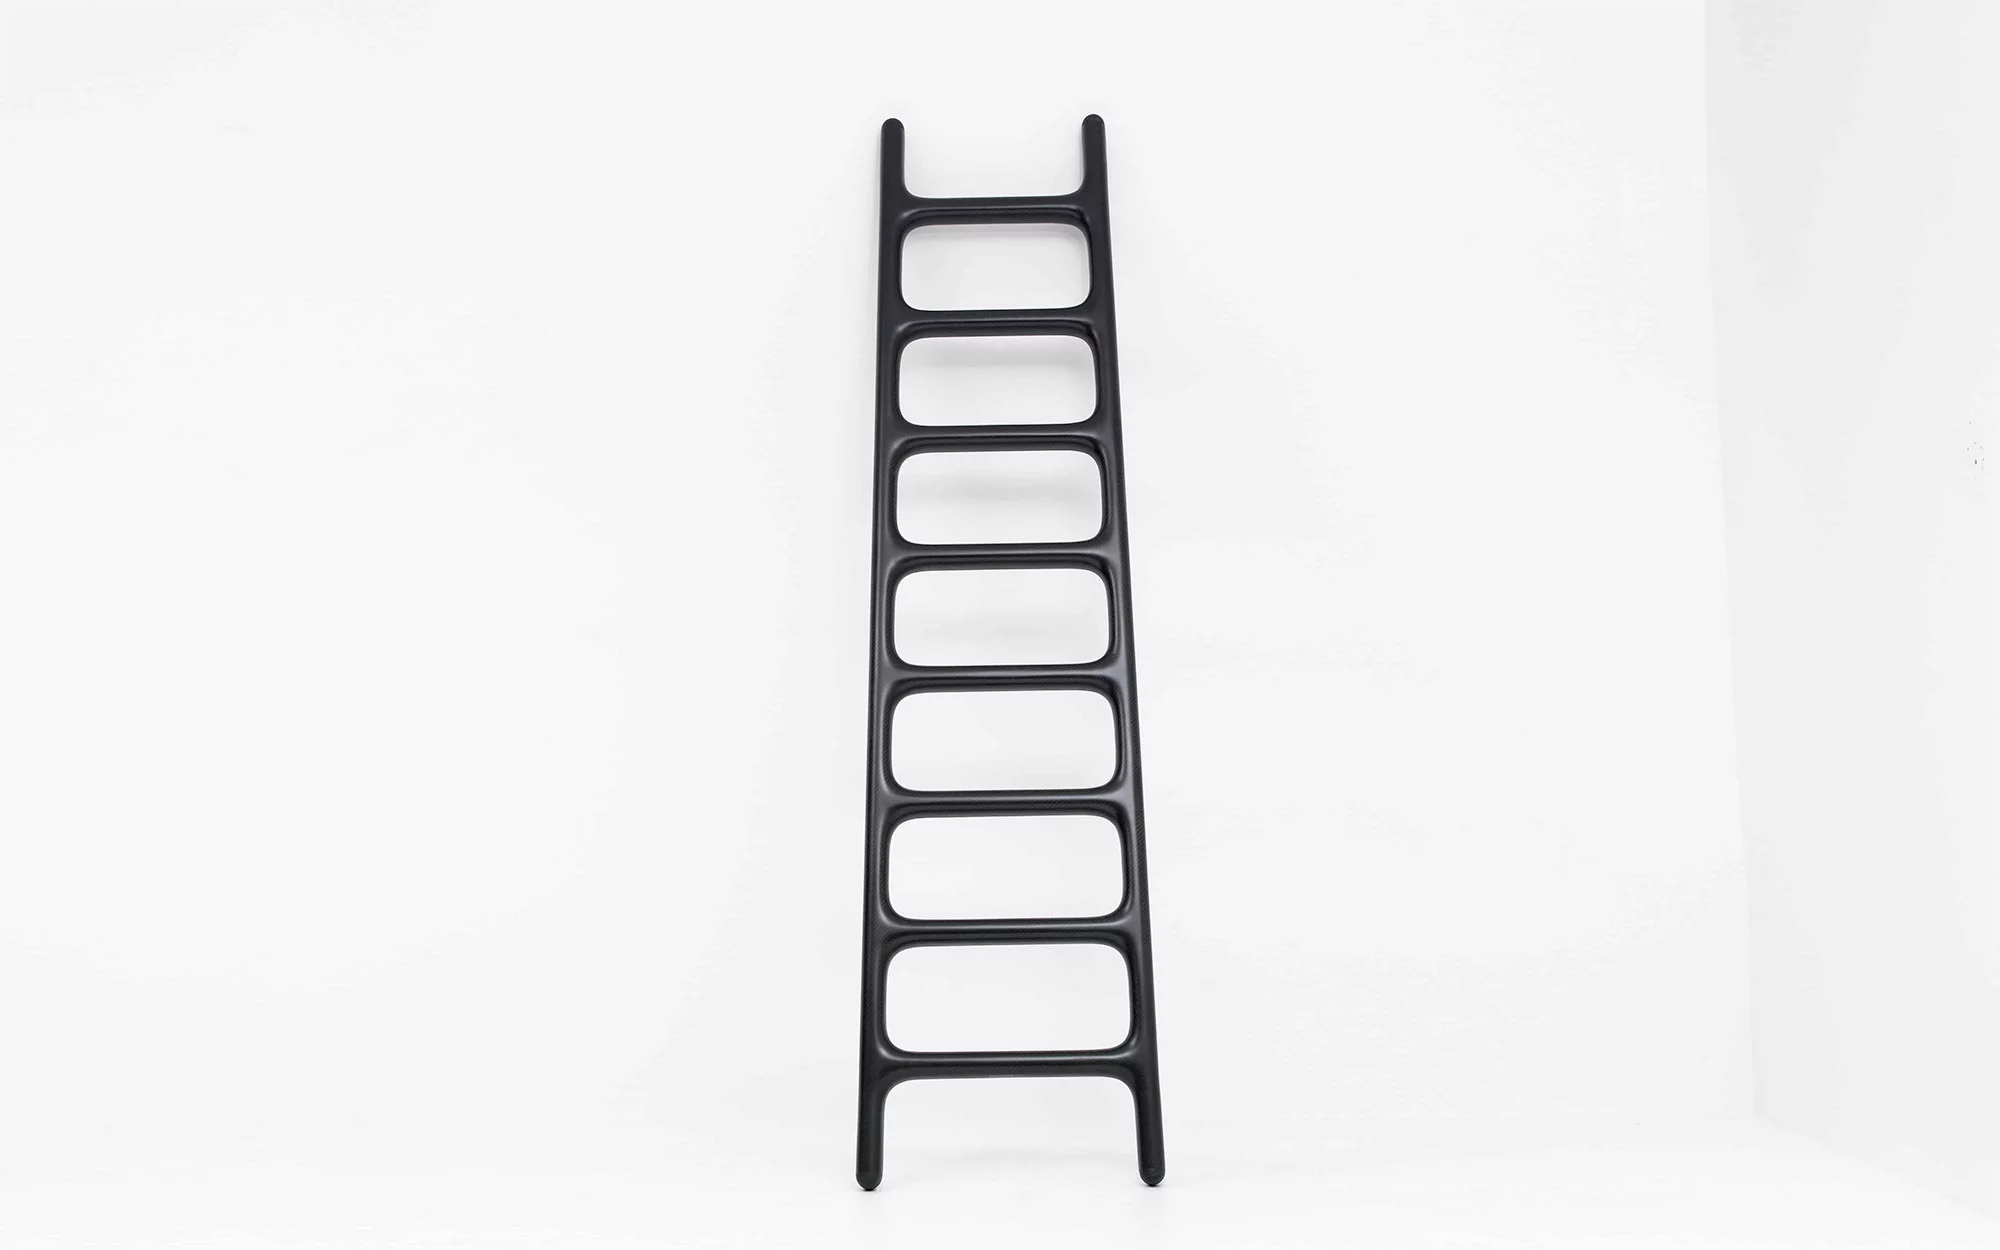 Carbon Ladder - Marc Newson - Chair - Galerie kreo